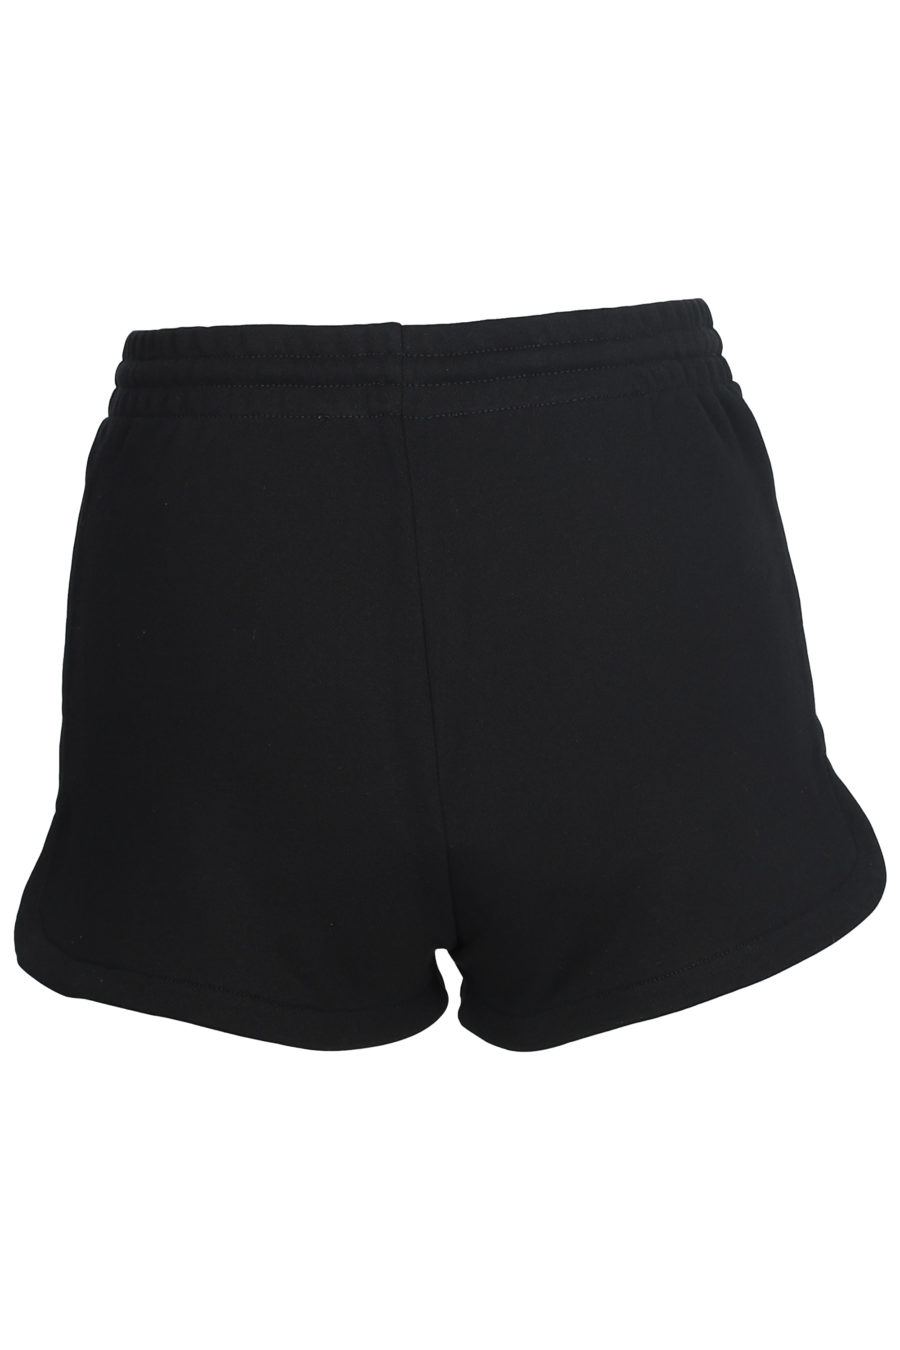 Schwarze Shorts mit farbigem Logo - IMG 5604